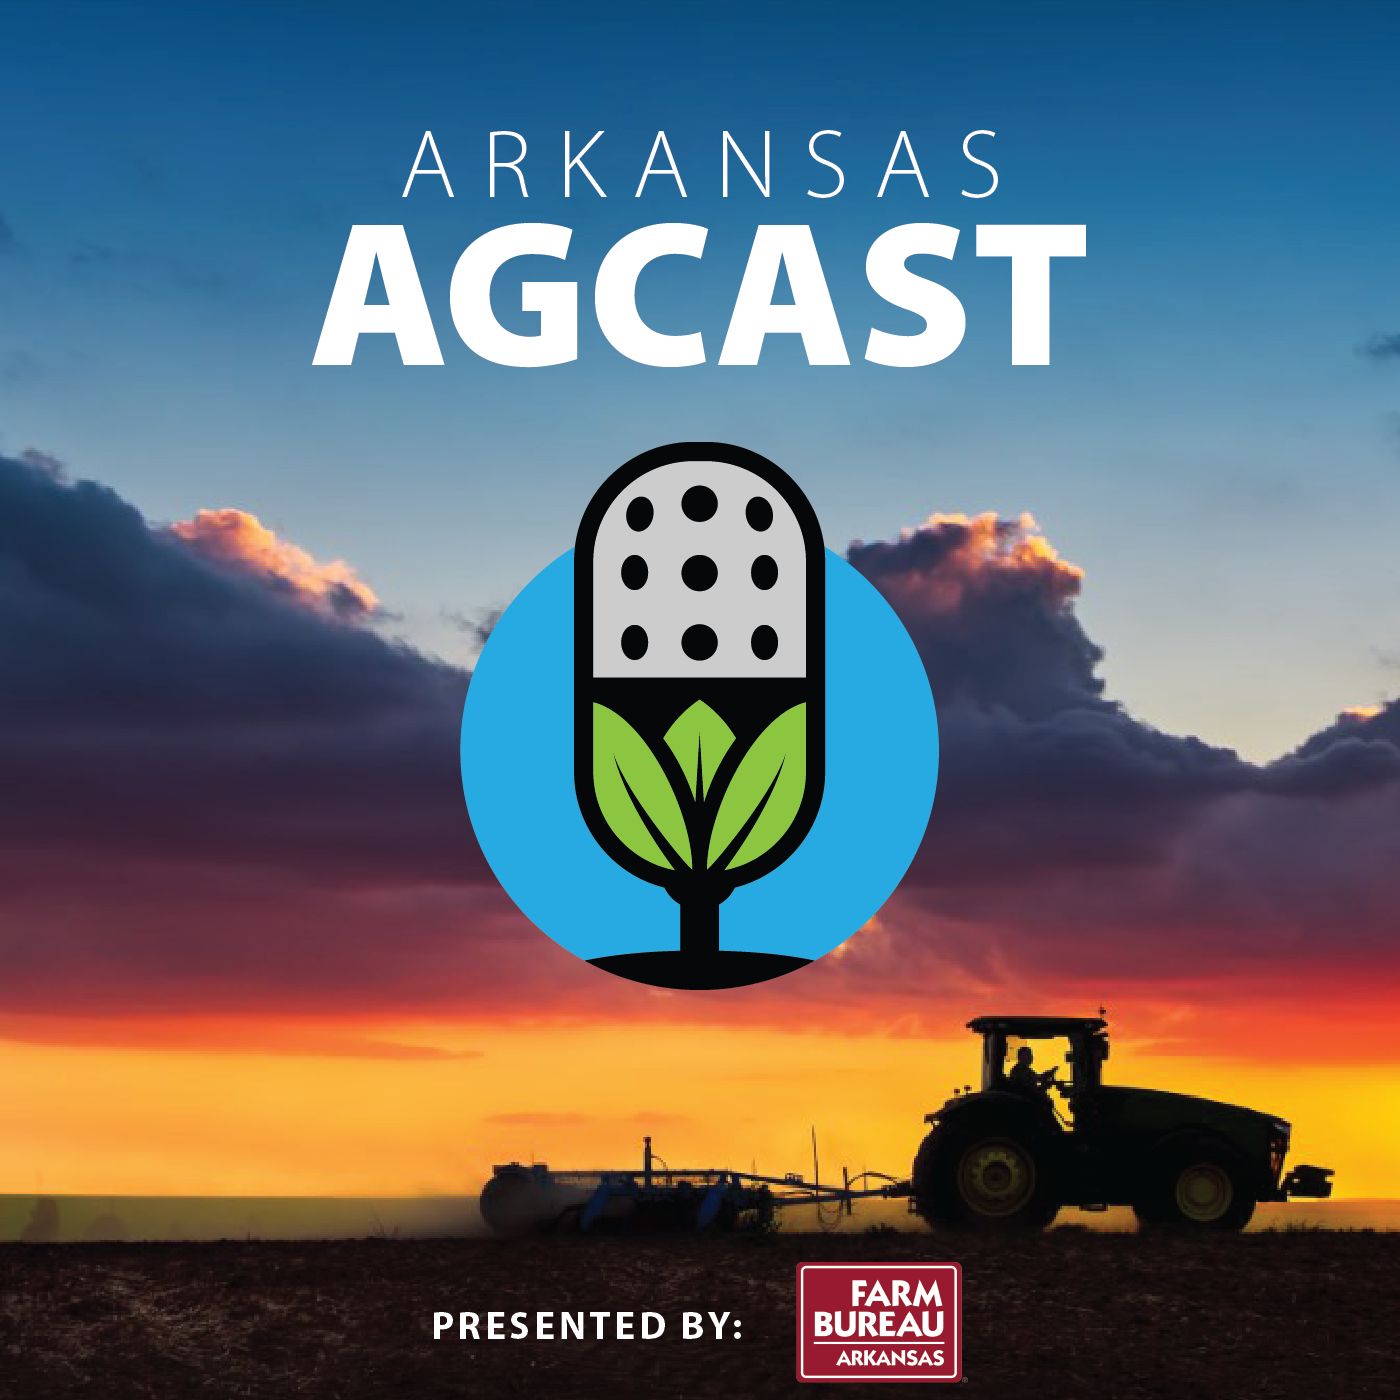 Arkansas AgCast Thanksgiving Dinner, State Convention